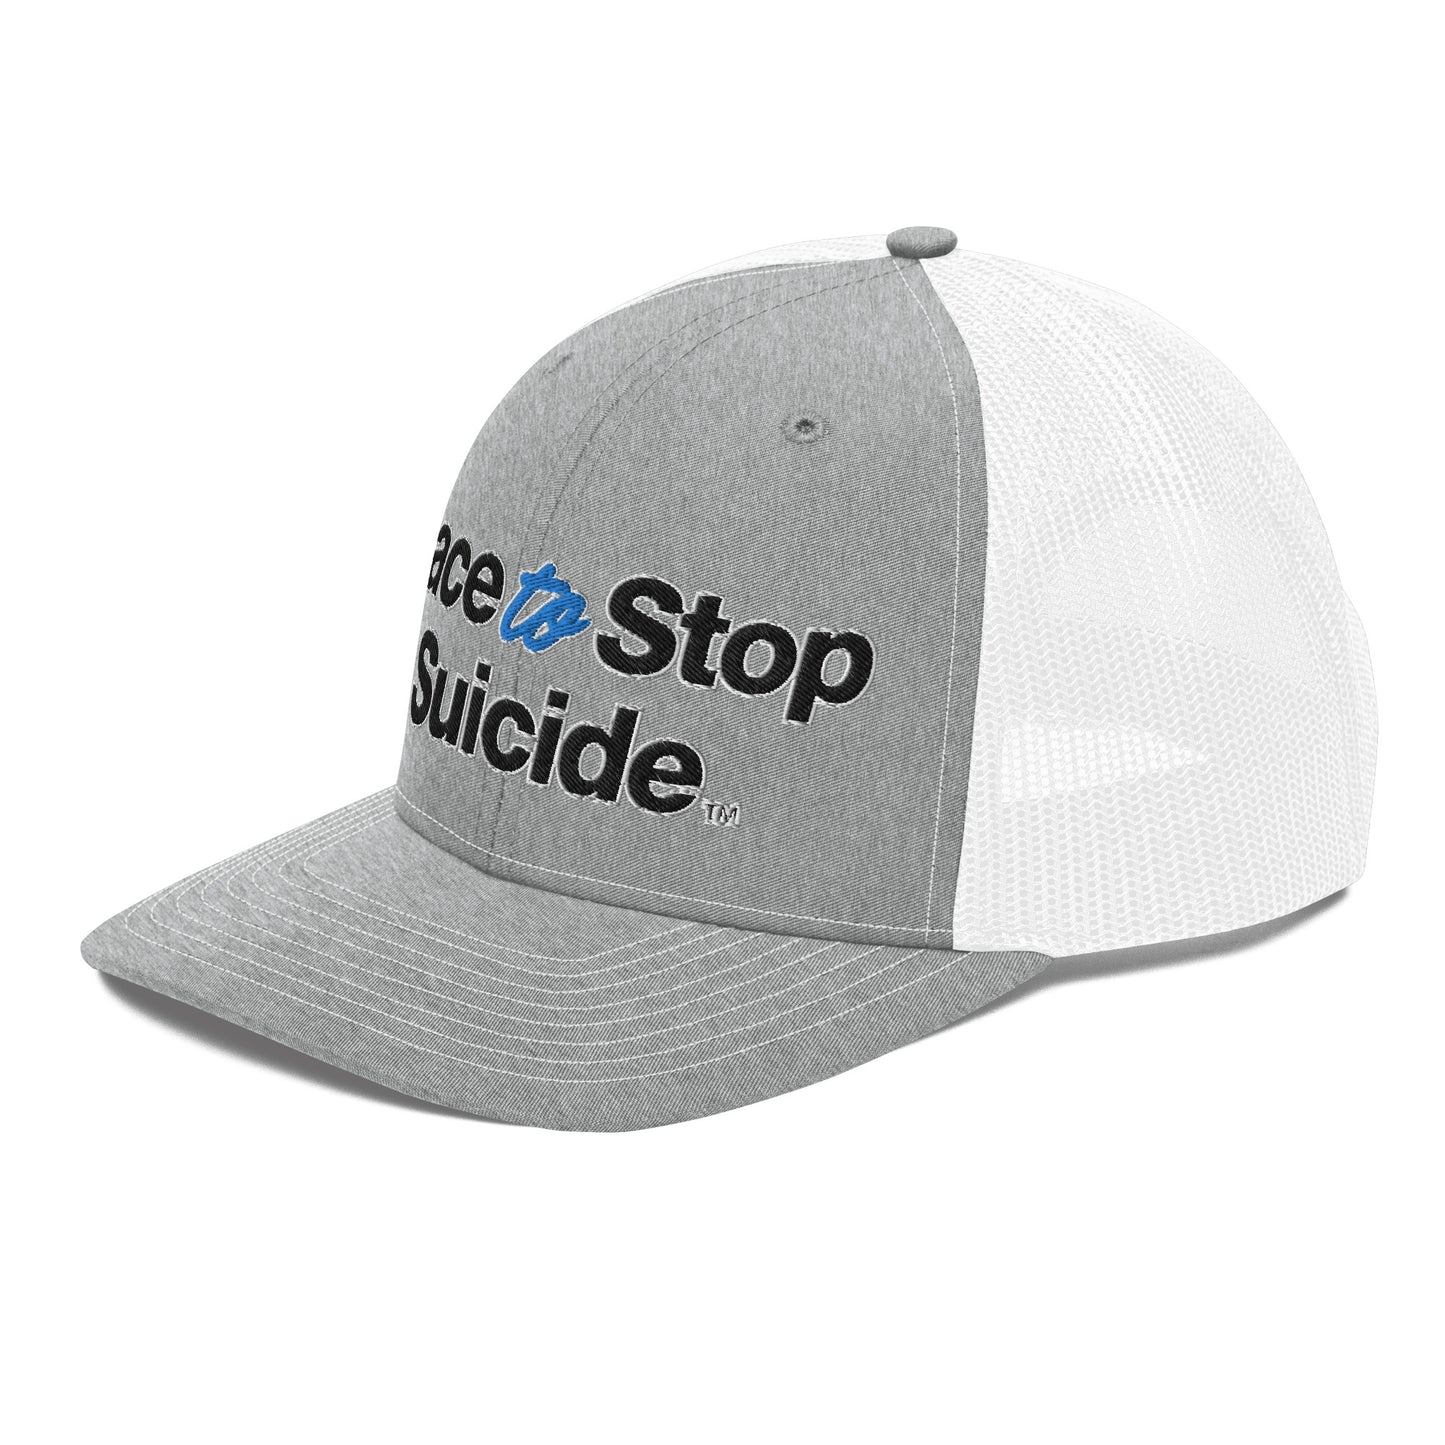 Race to Stop Suicide Snapback - [Daniel Dye Racing Shop]